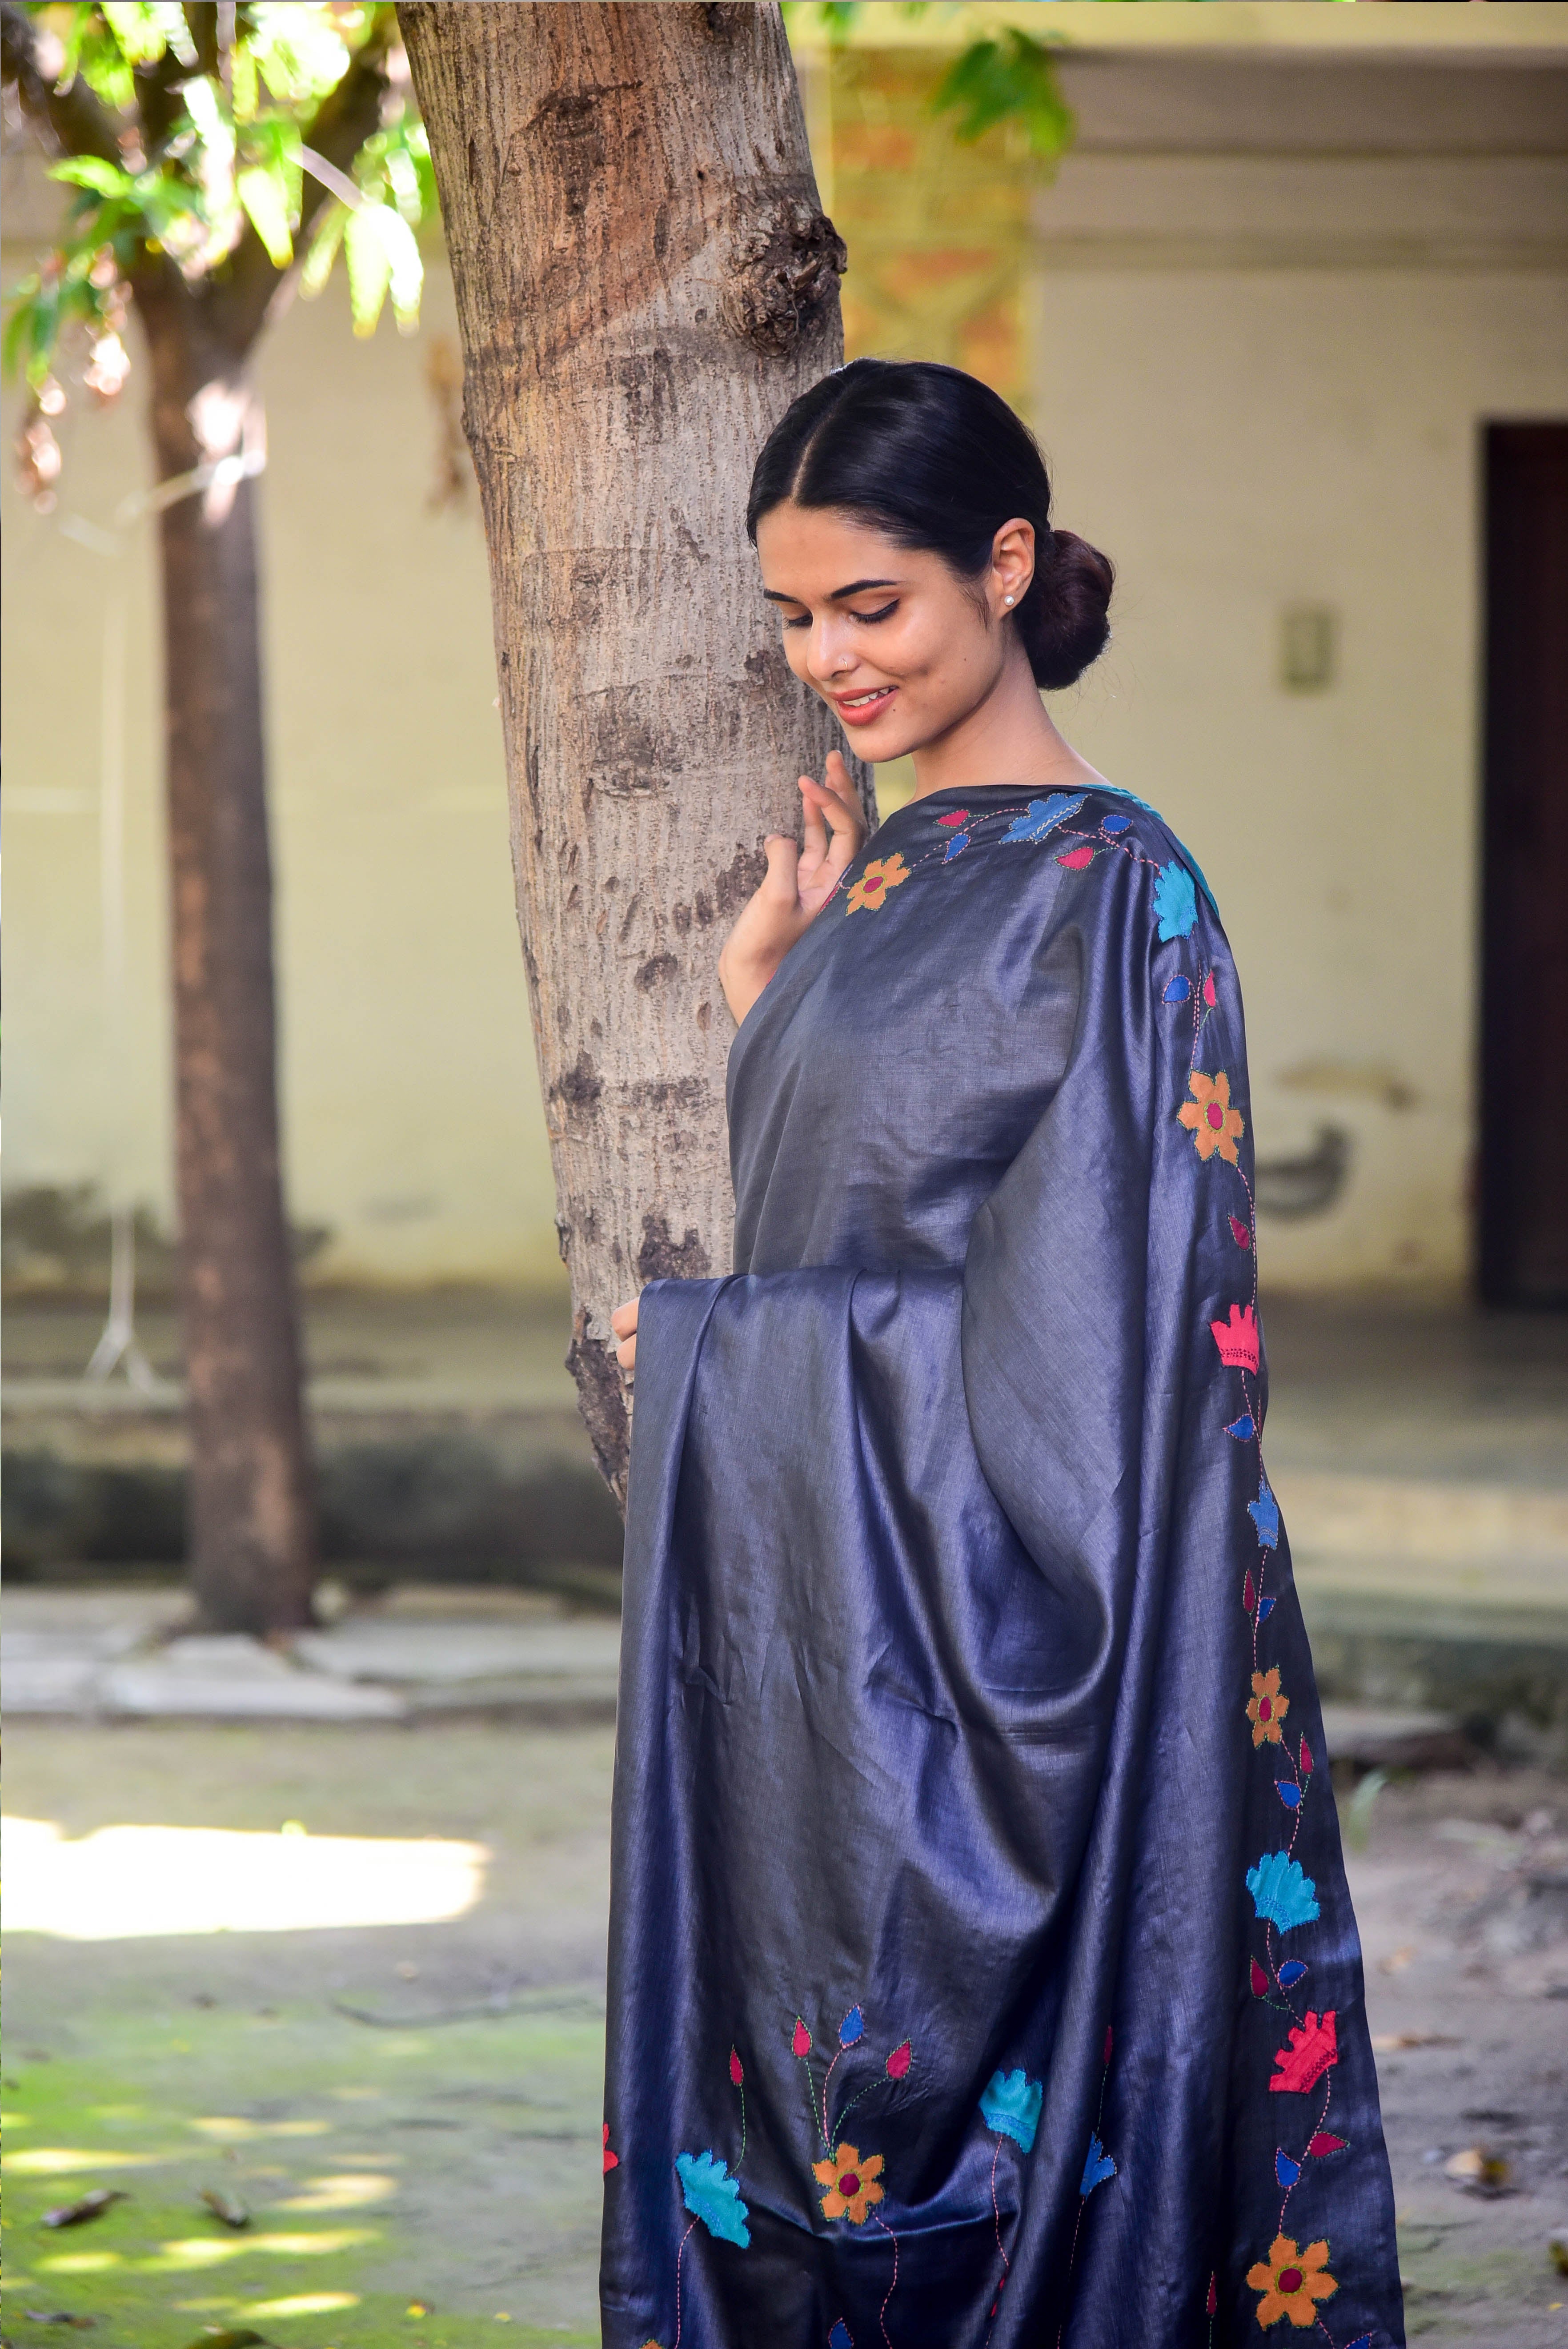 Silk sari with patch work